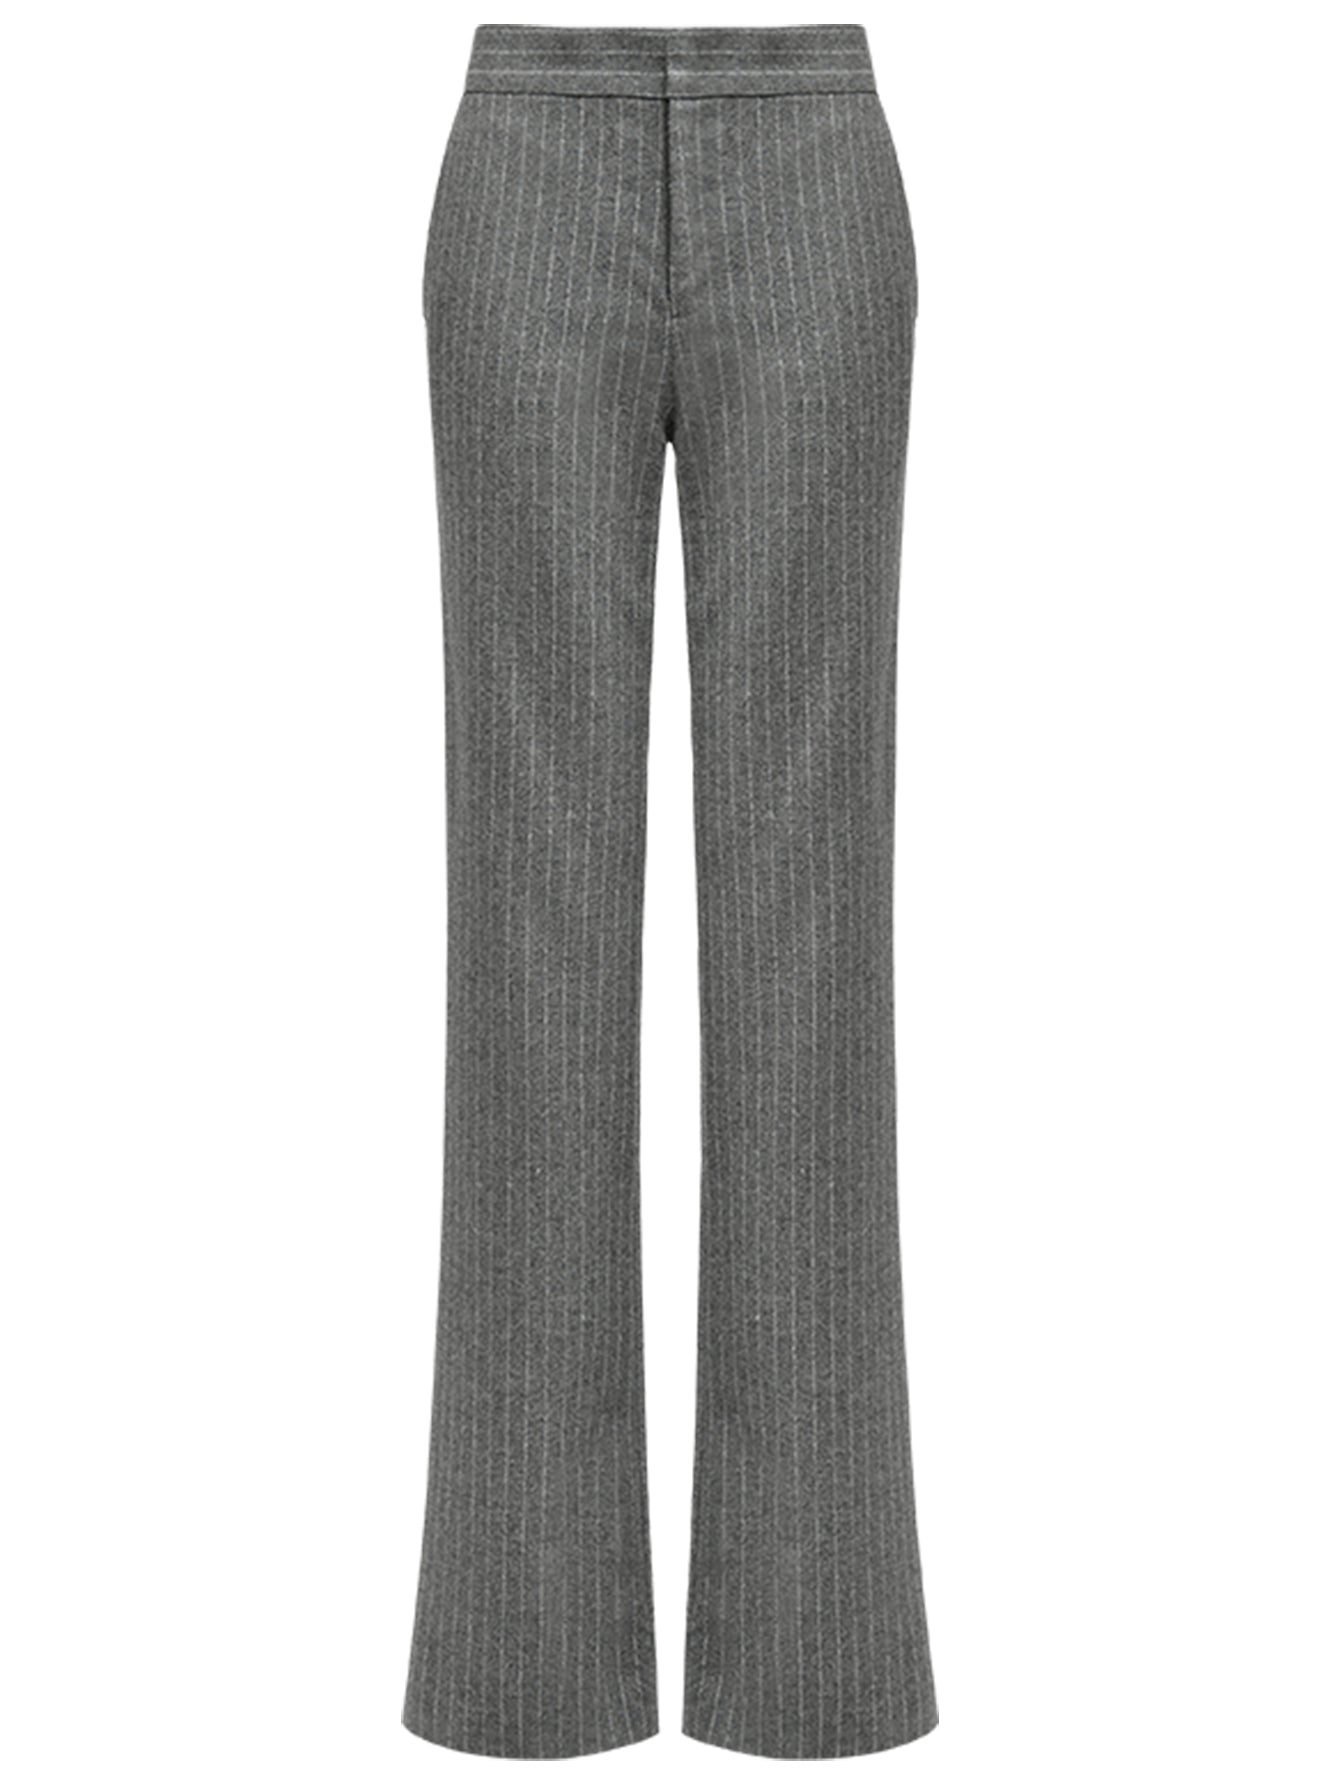 all-around-warm-striped-grey-wool-pants_all_grey_5.jpg